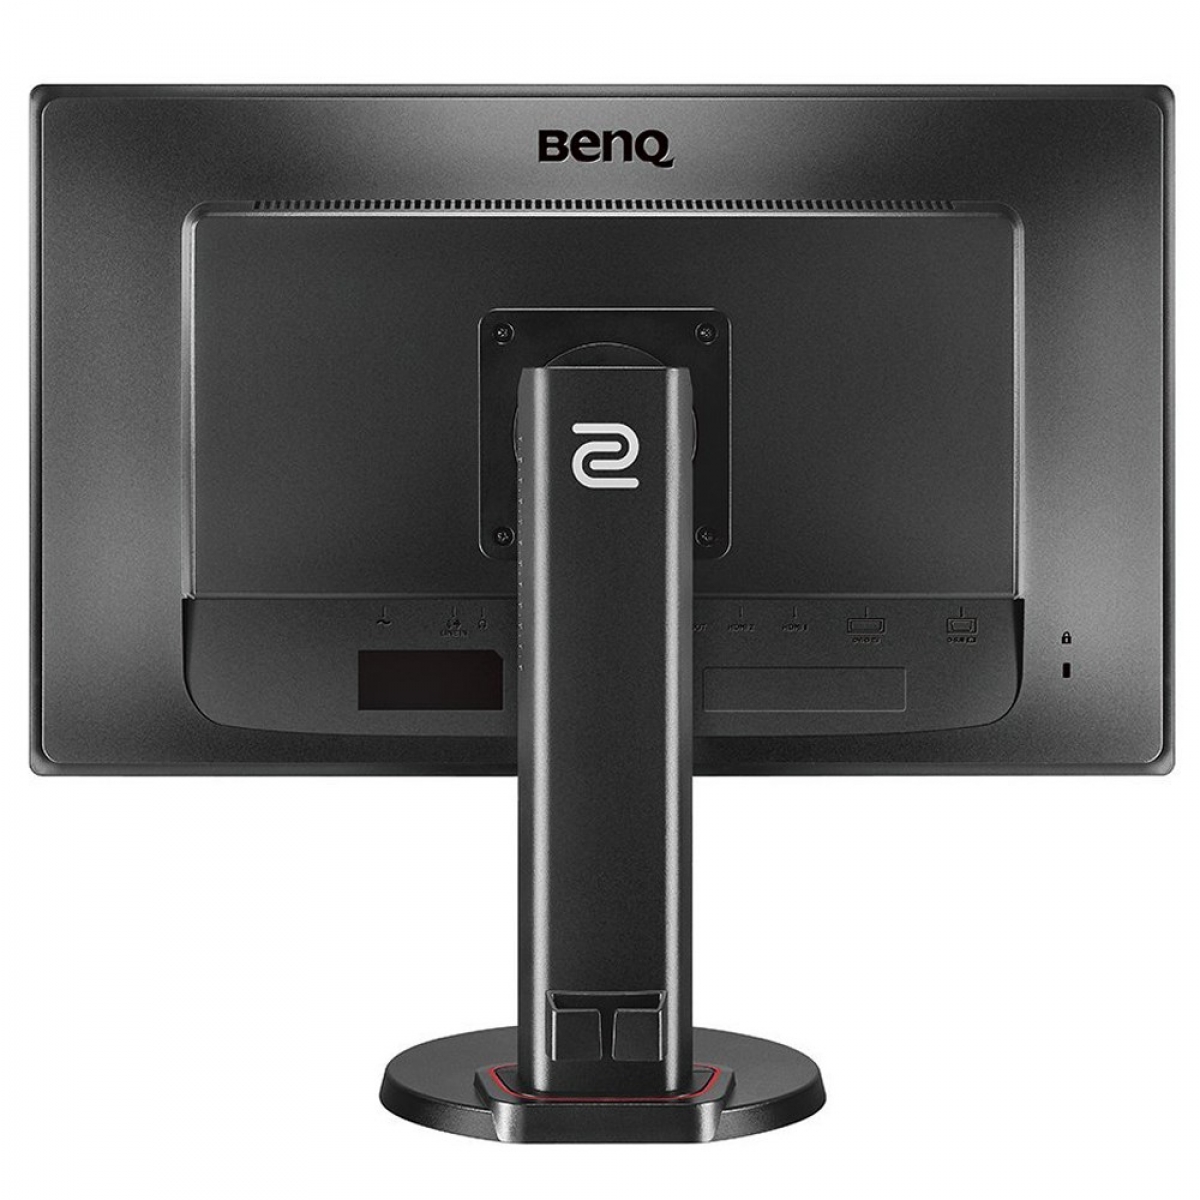 Monitor Benq Zowie 24 Pol, Full HD, 1ms, RL2460